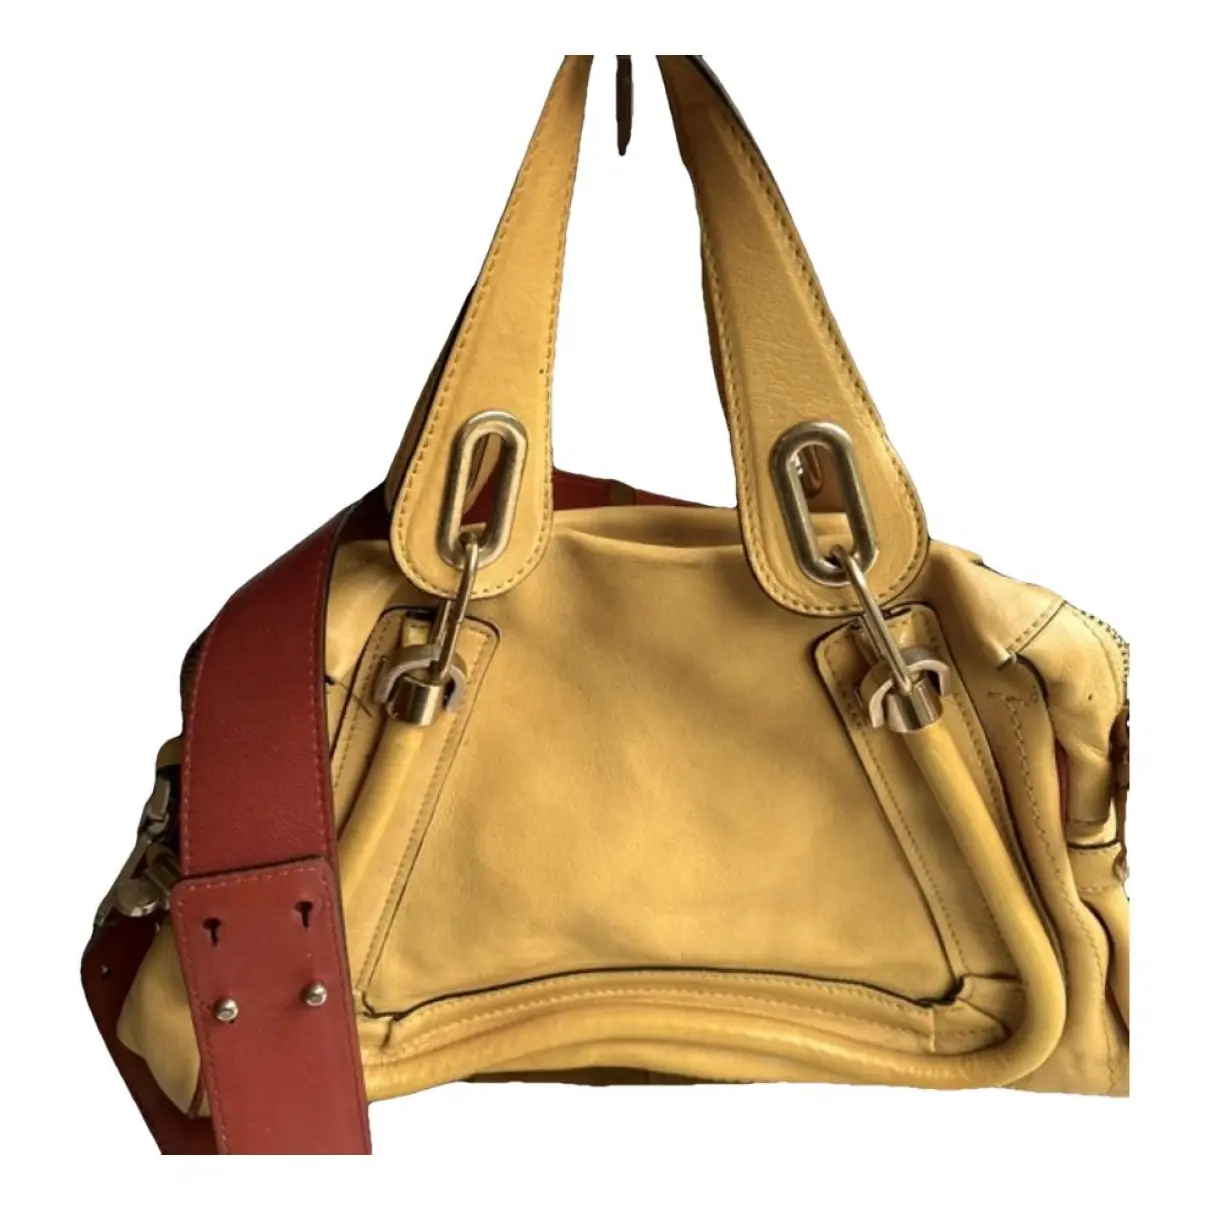 Paraty leather handbag